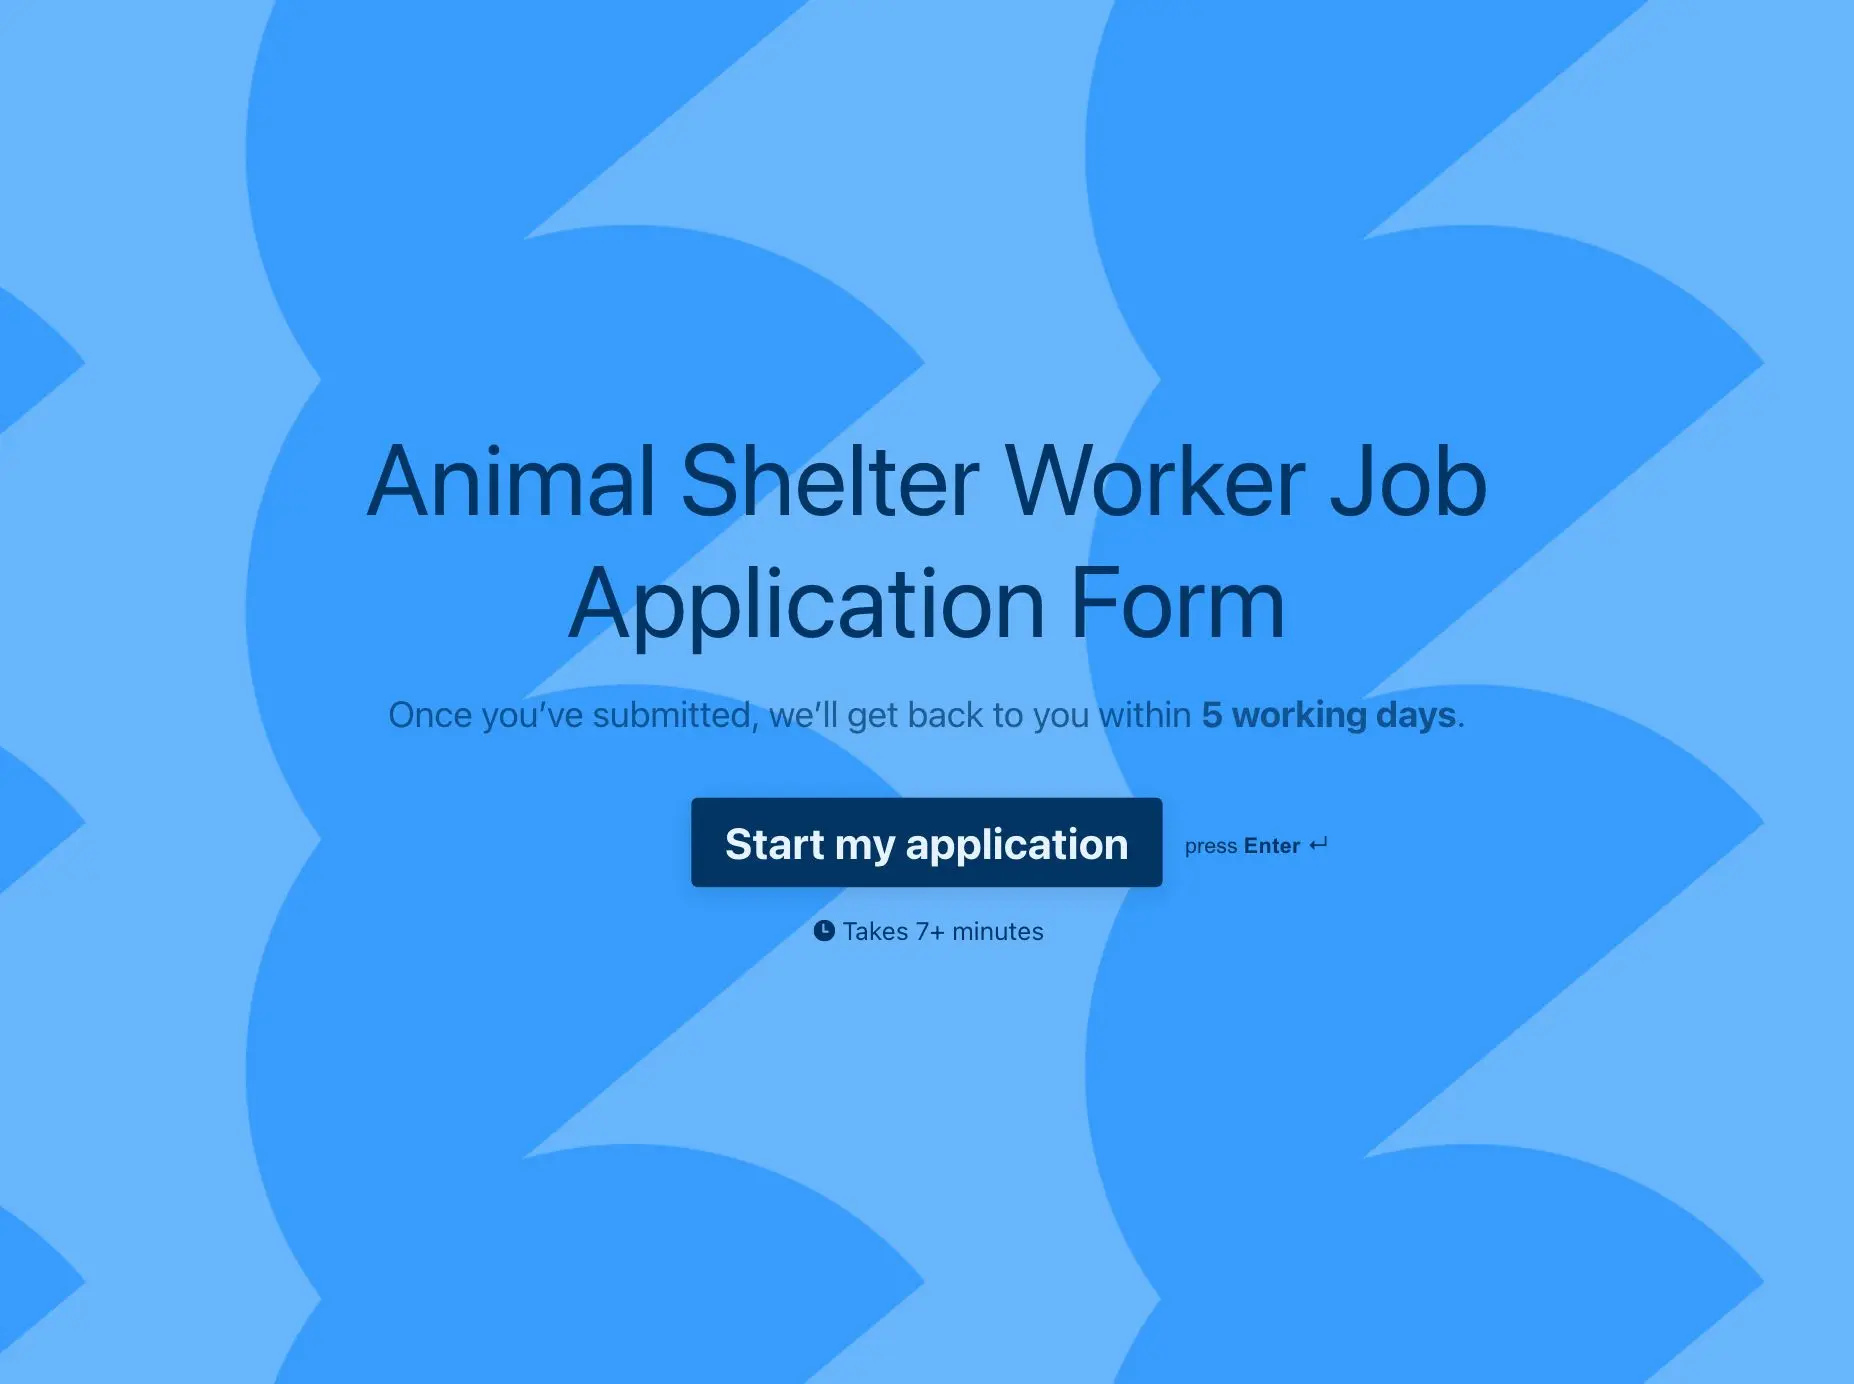 Animal Shelter Worker Job Application Form Template Hero